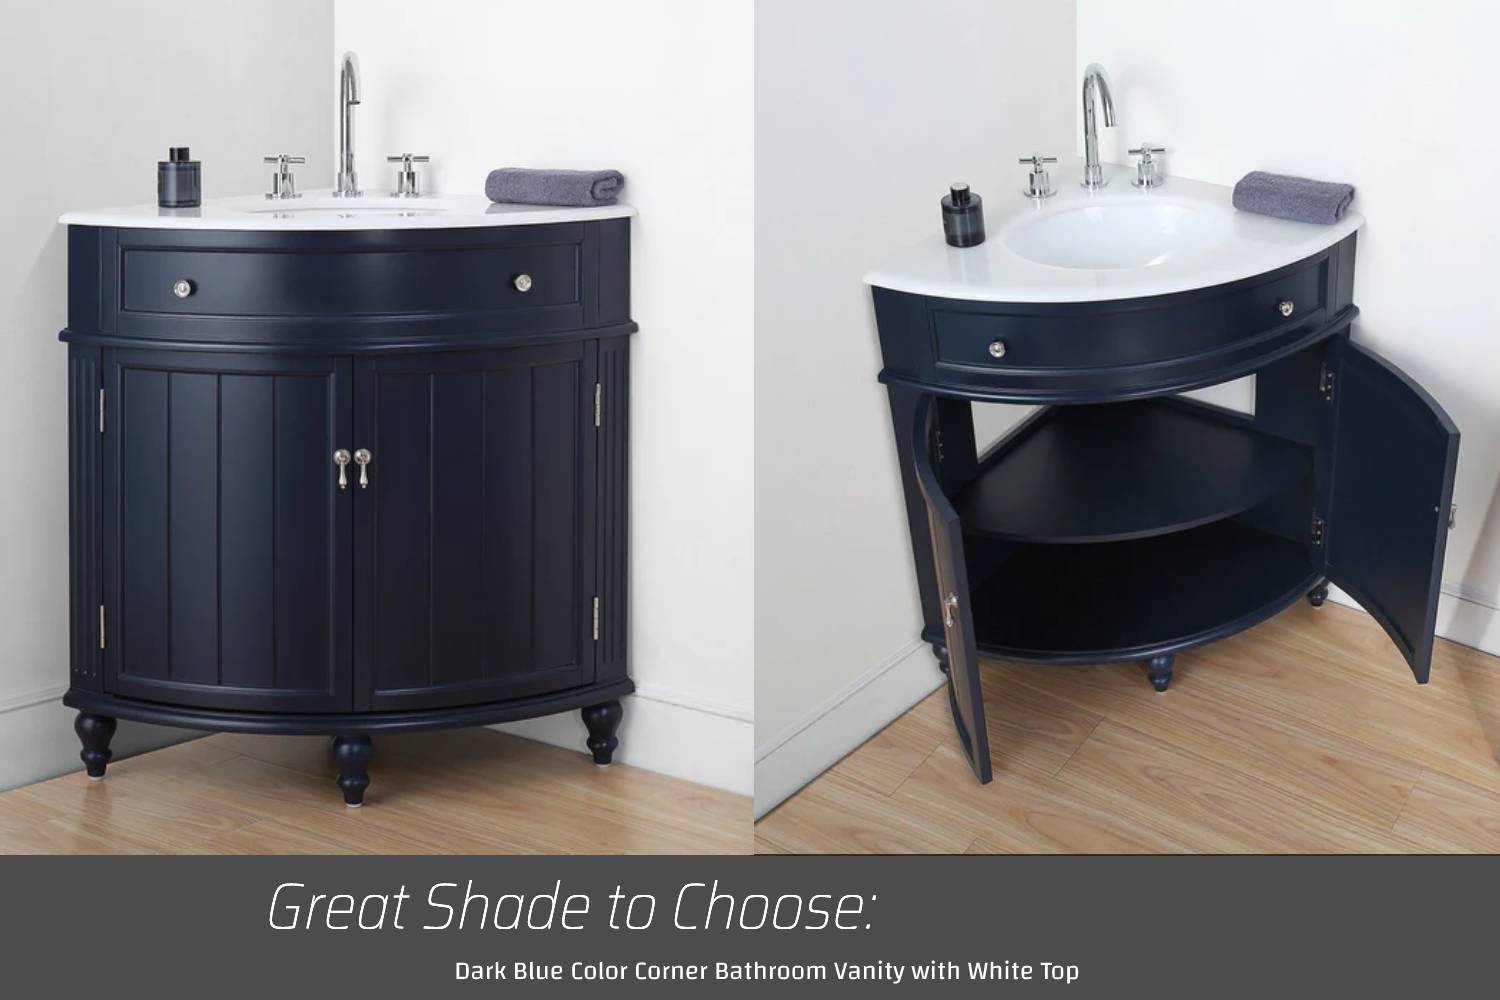 Great shade to choose dark blue color corner bathroom vanity with white top